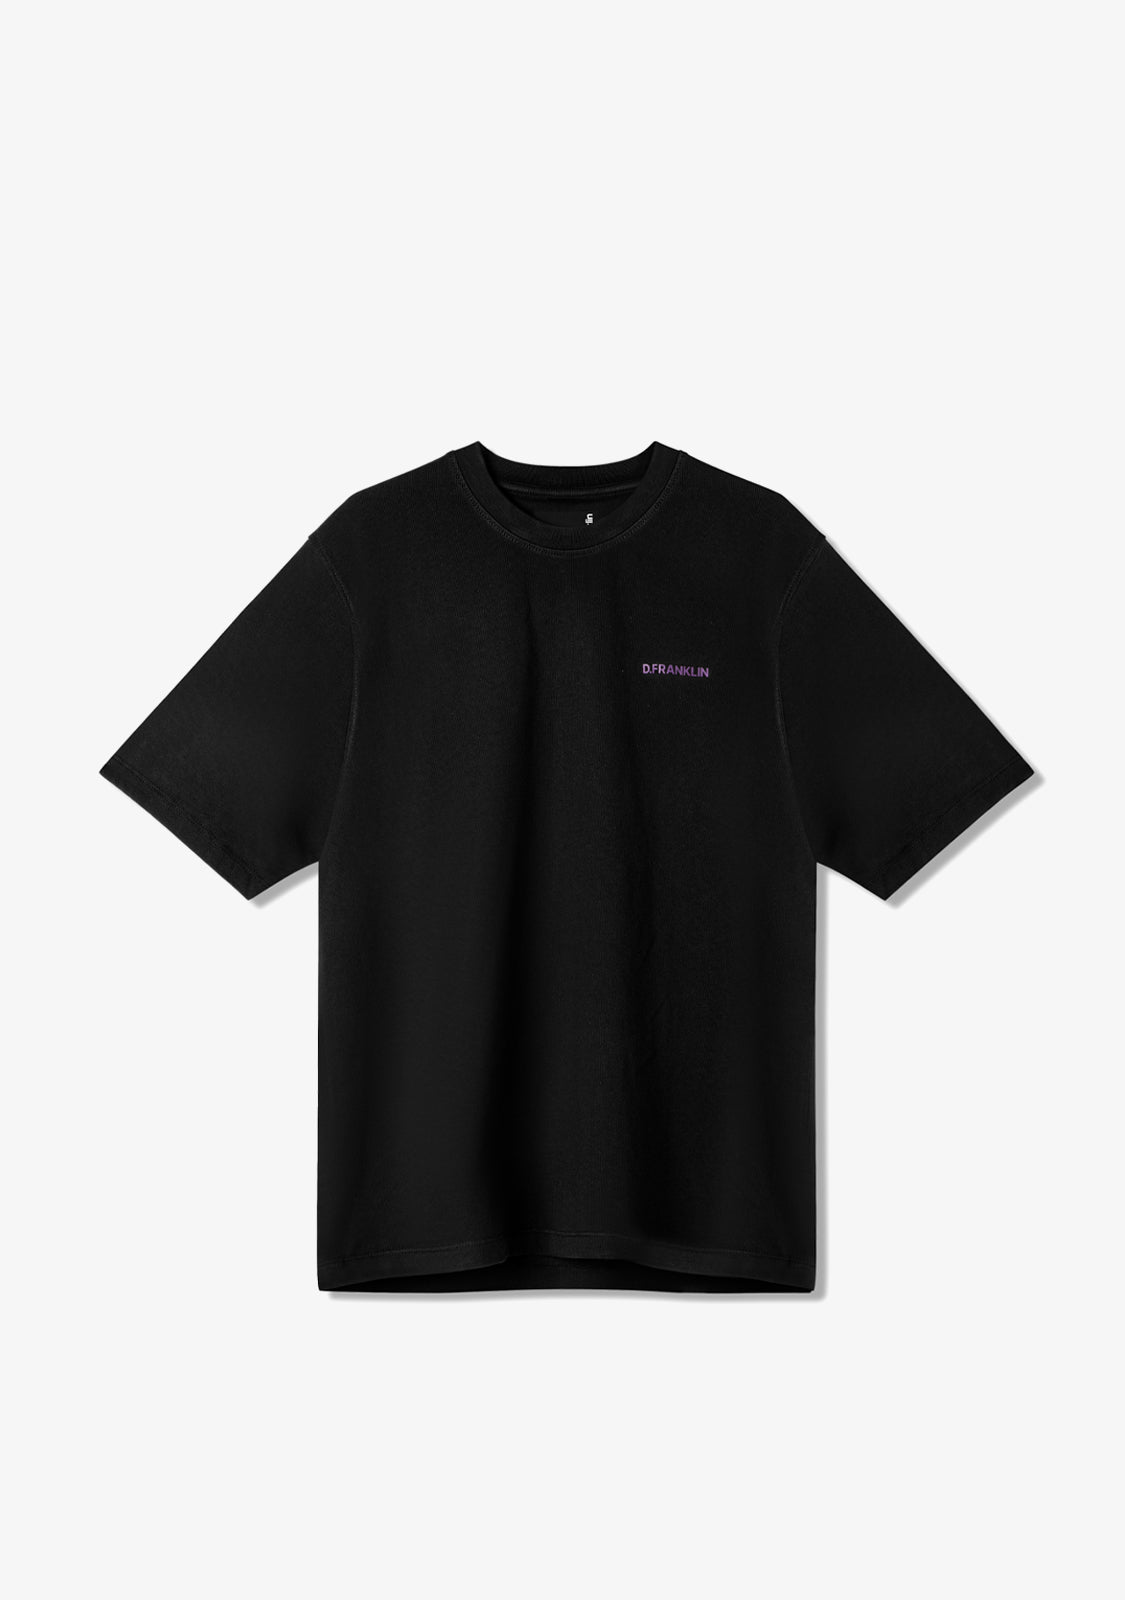 Sunsets T-Shirt Black / Purple